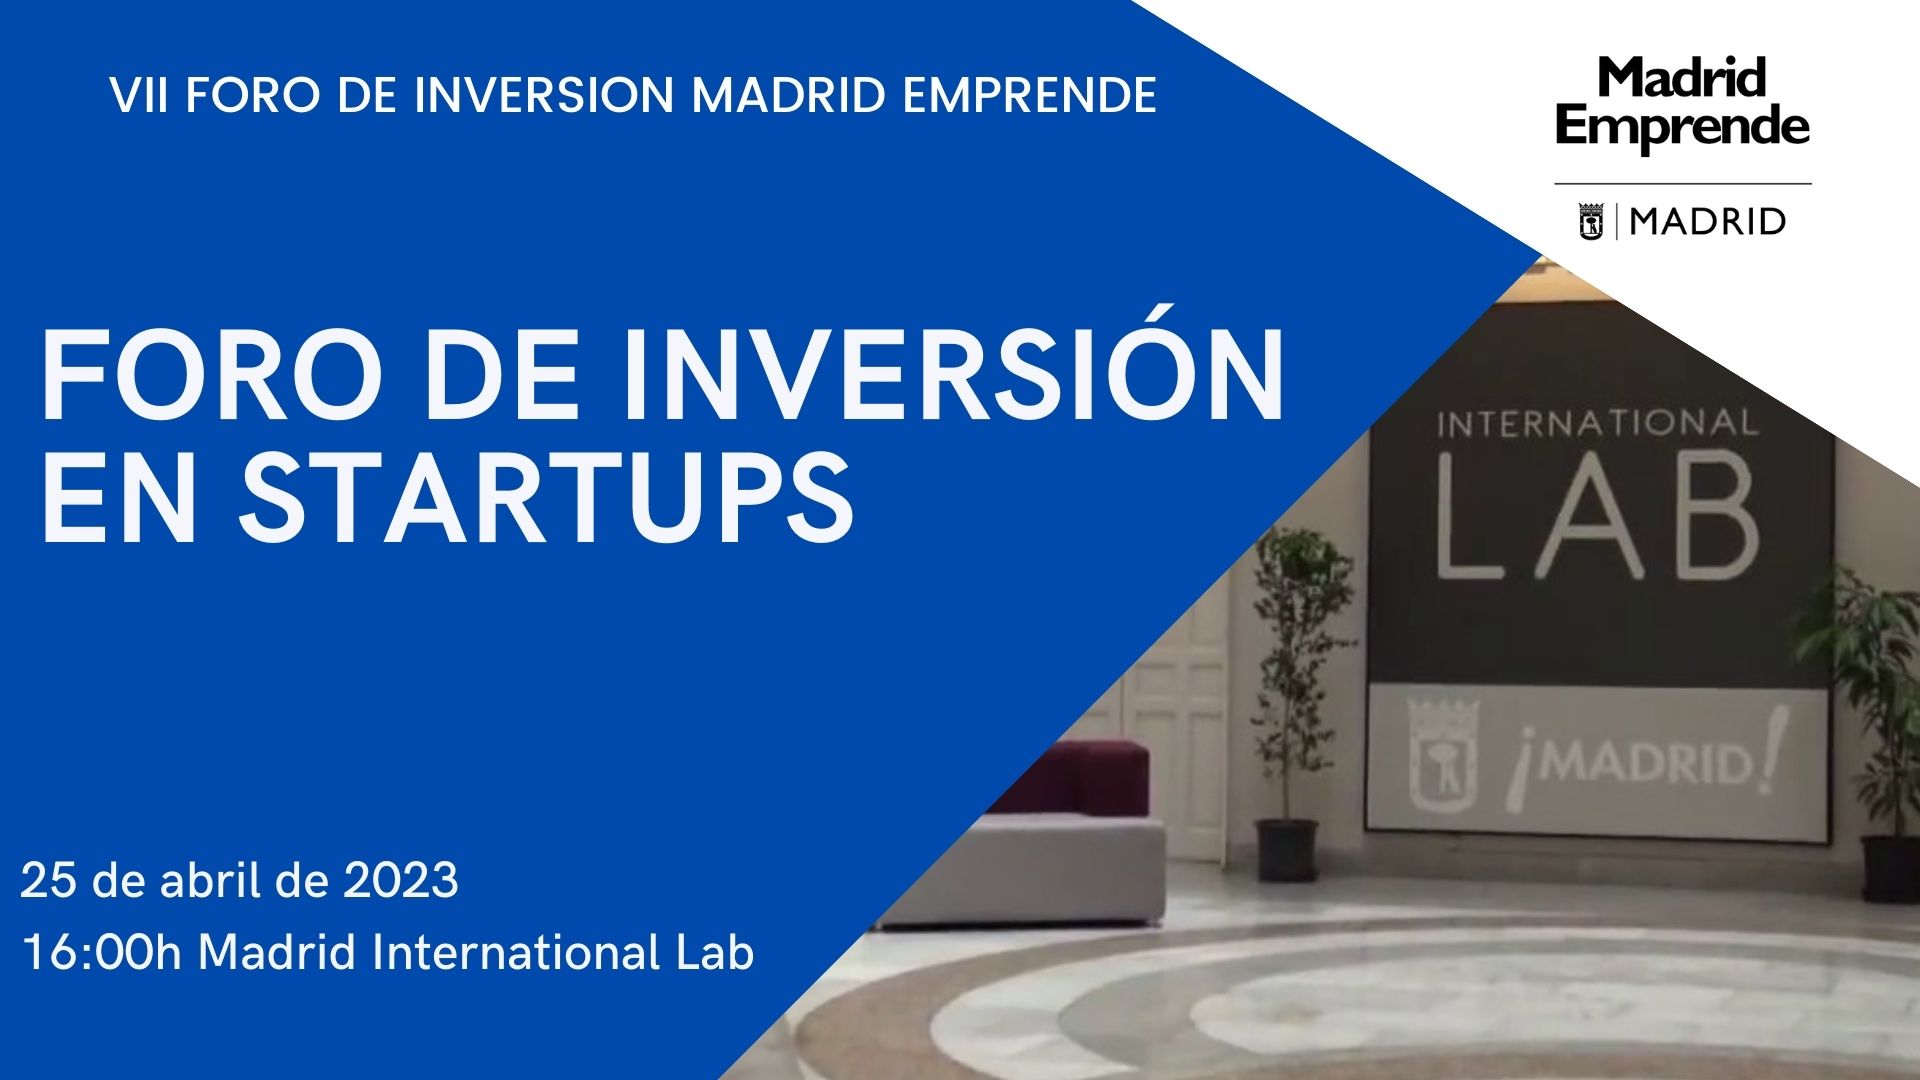 Foro de Inverisón en startups de Madrid